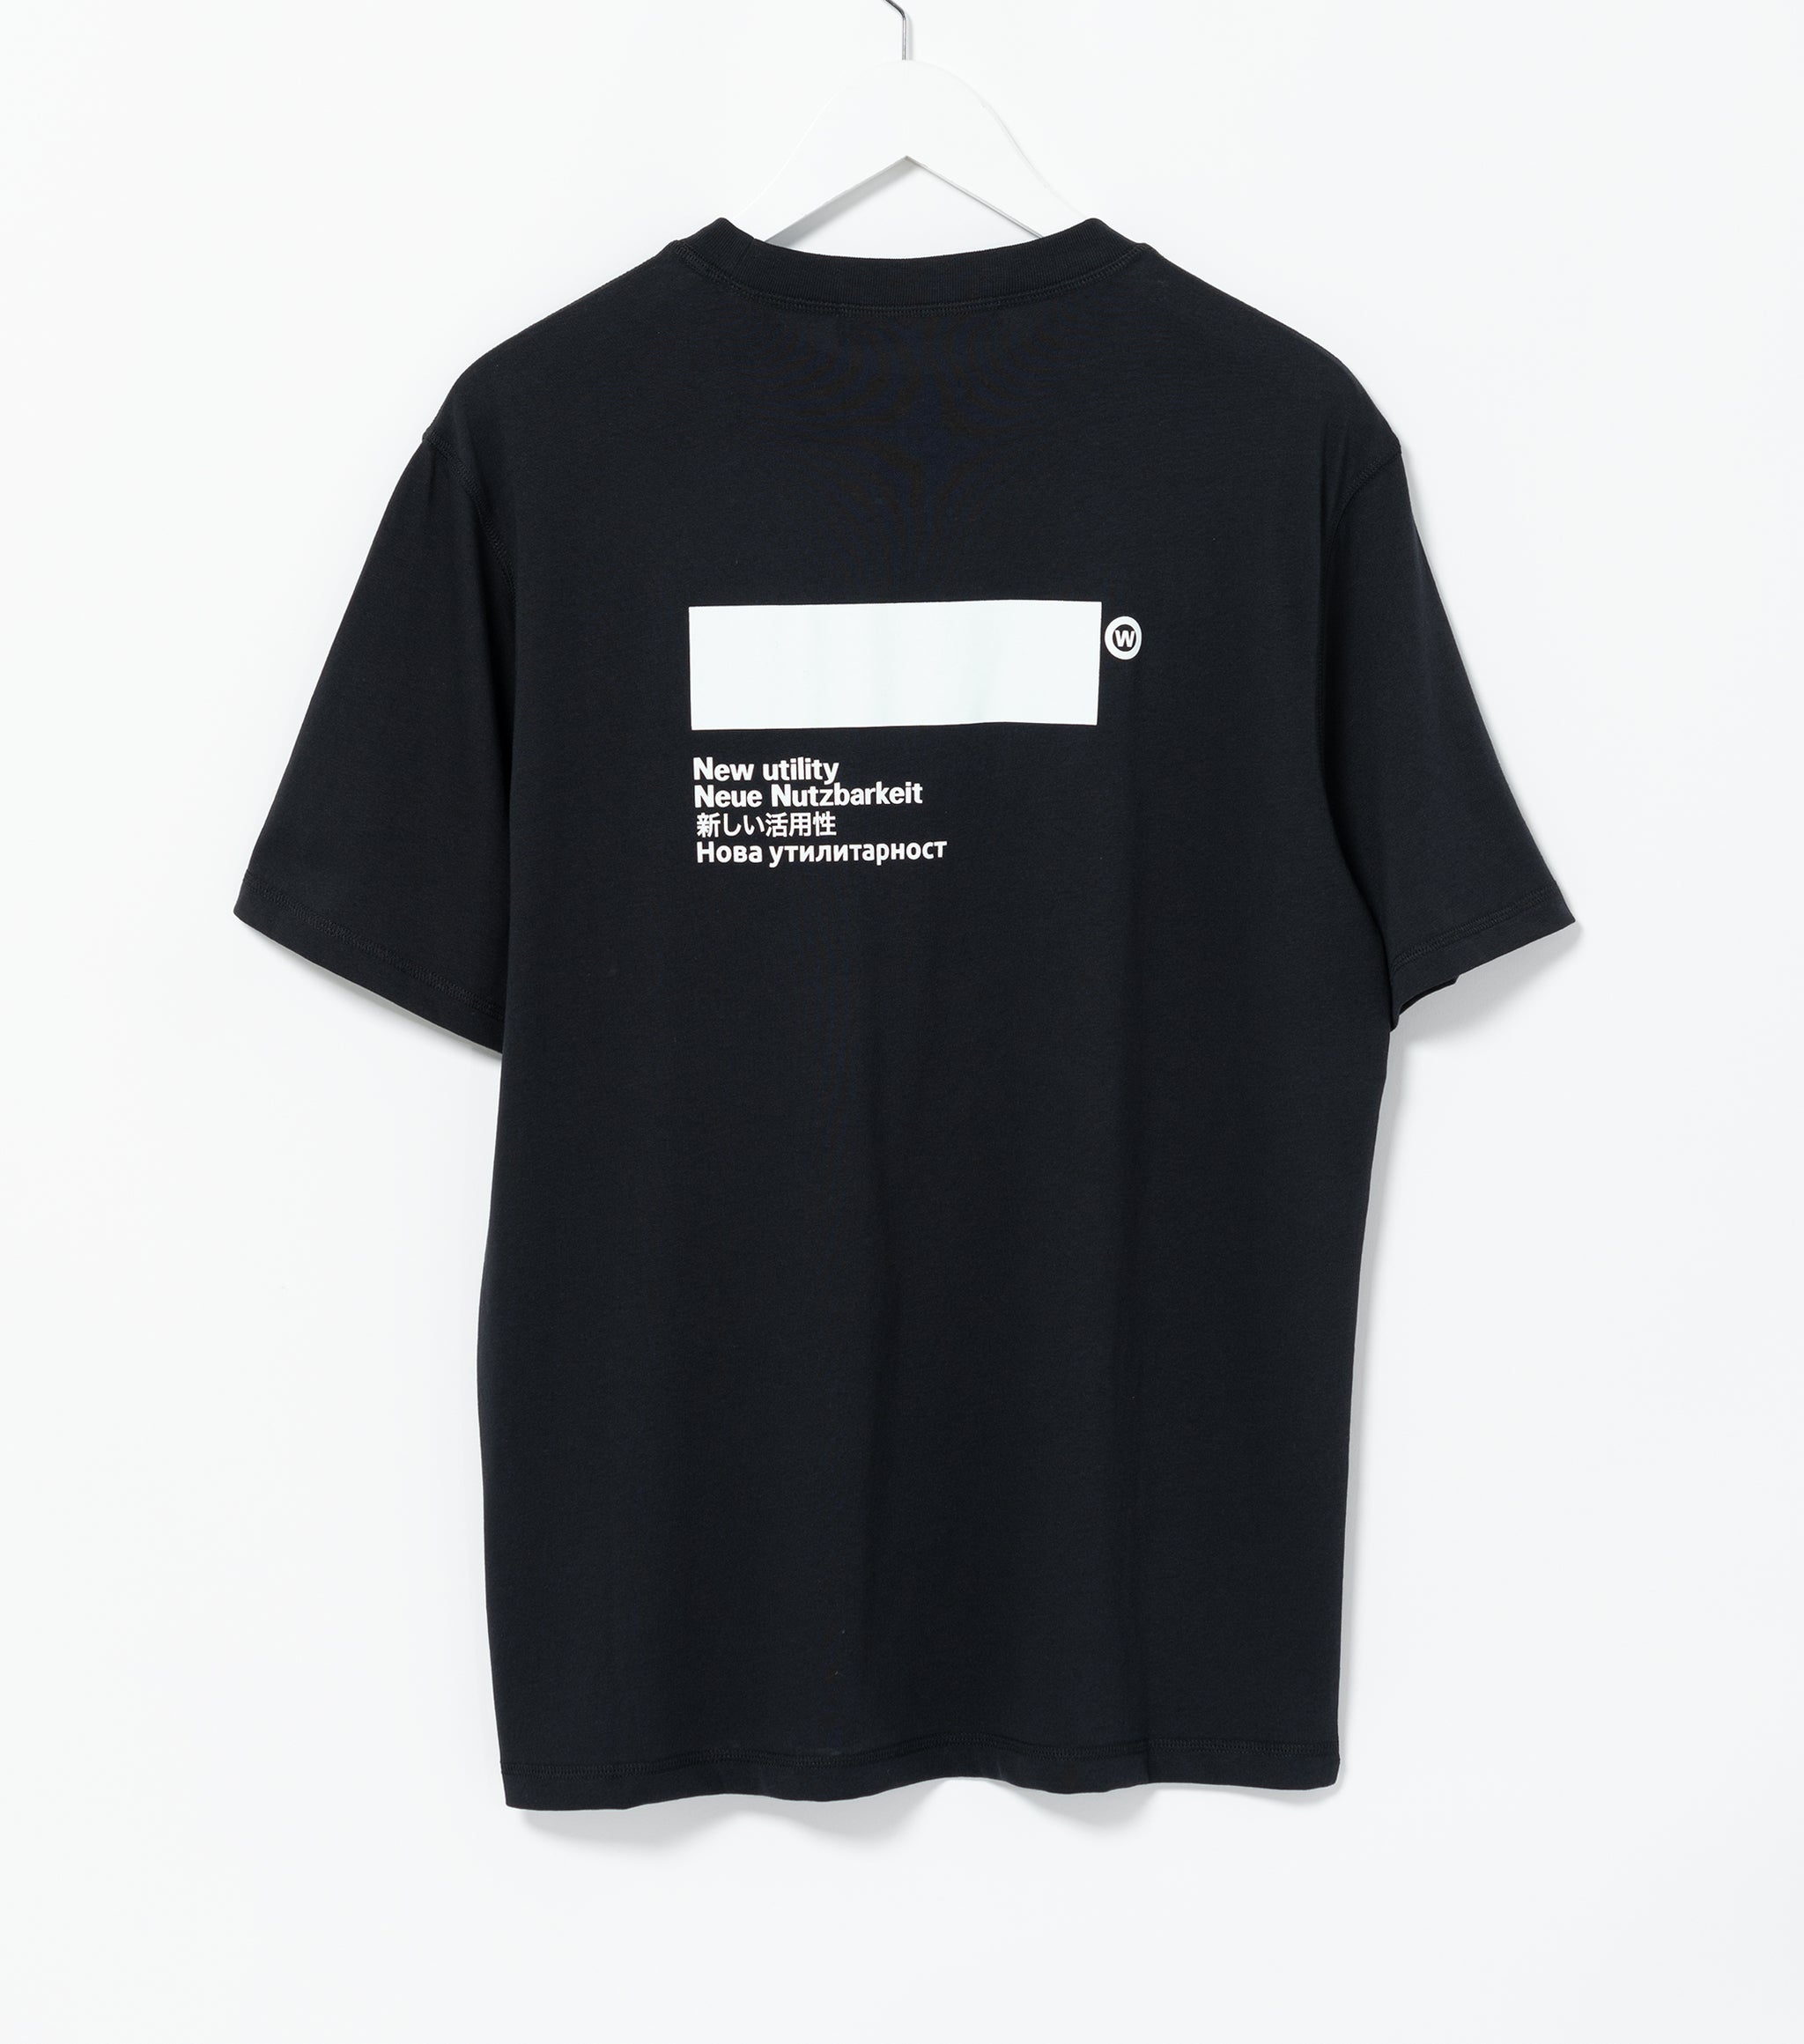 Standardised T-Shirt (Deep Black)